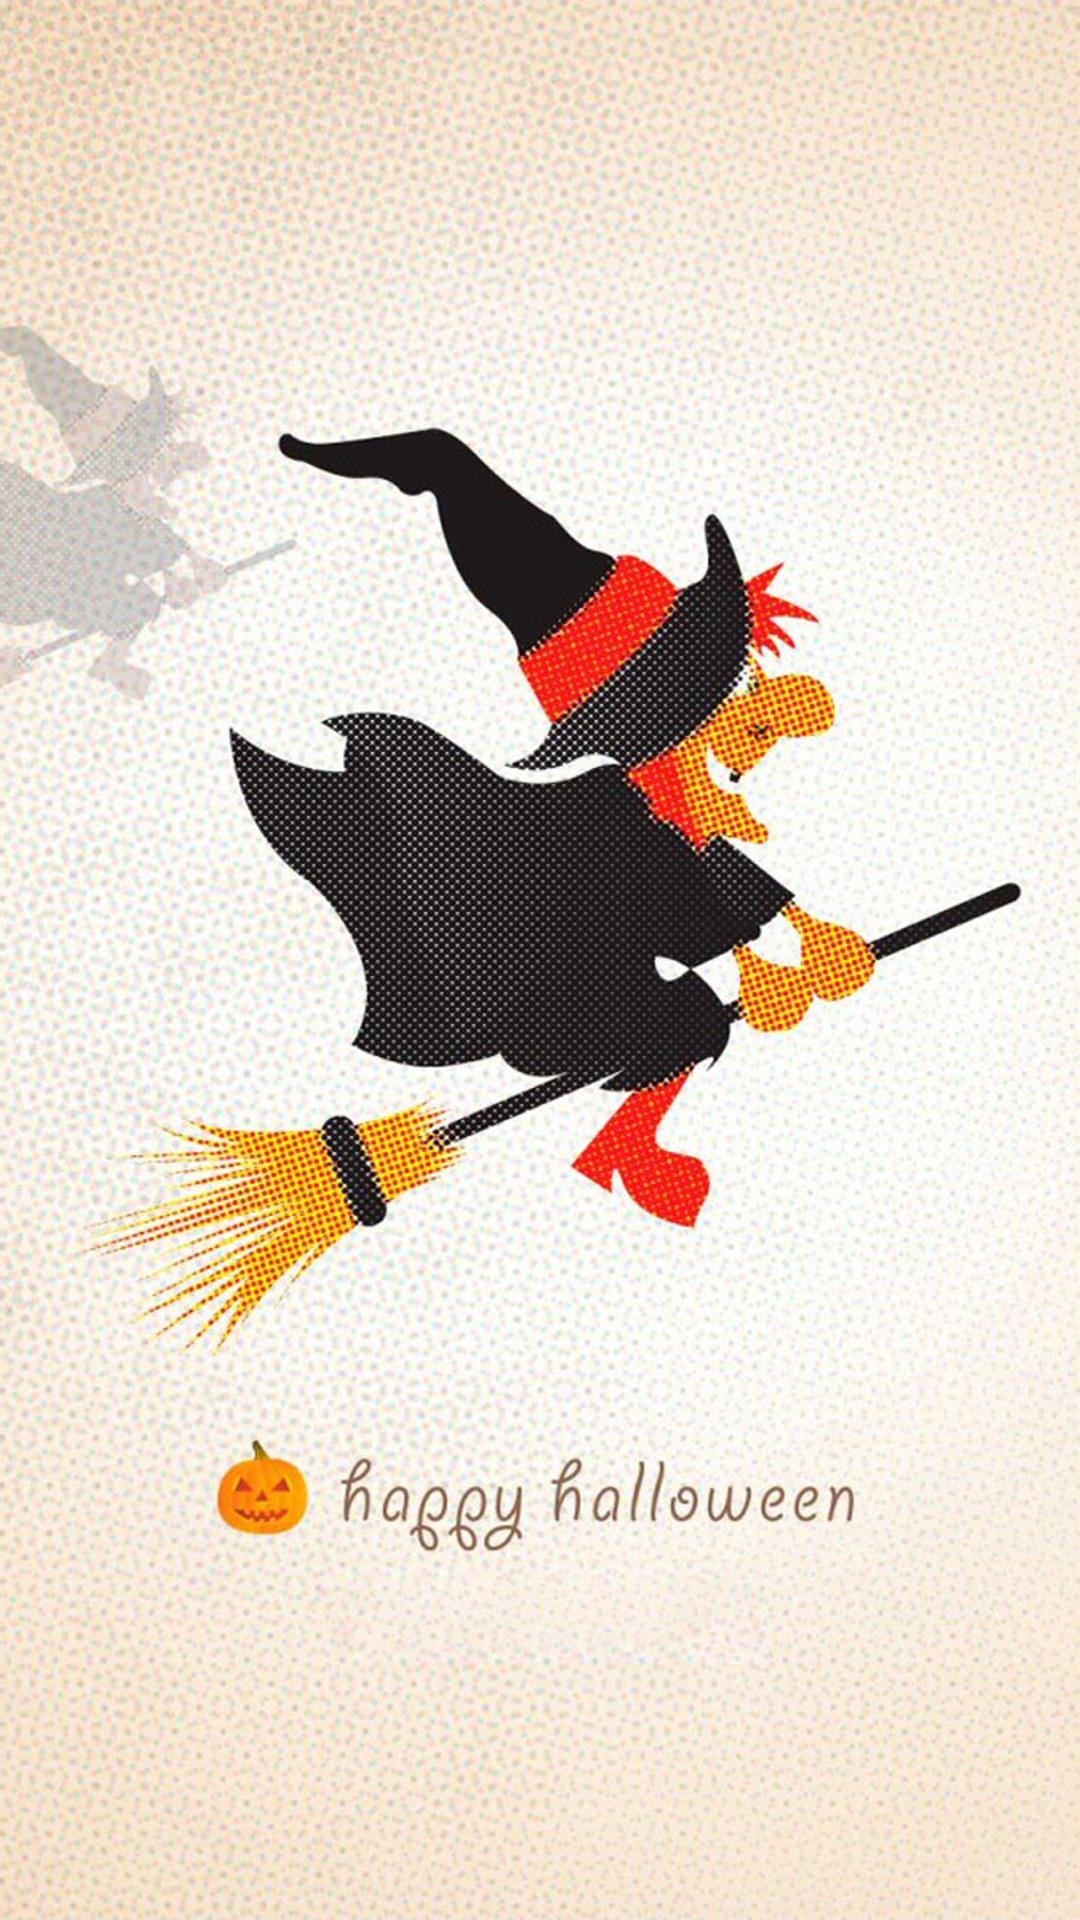 Happy Halloween Android wallpaper